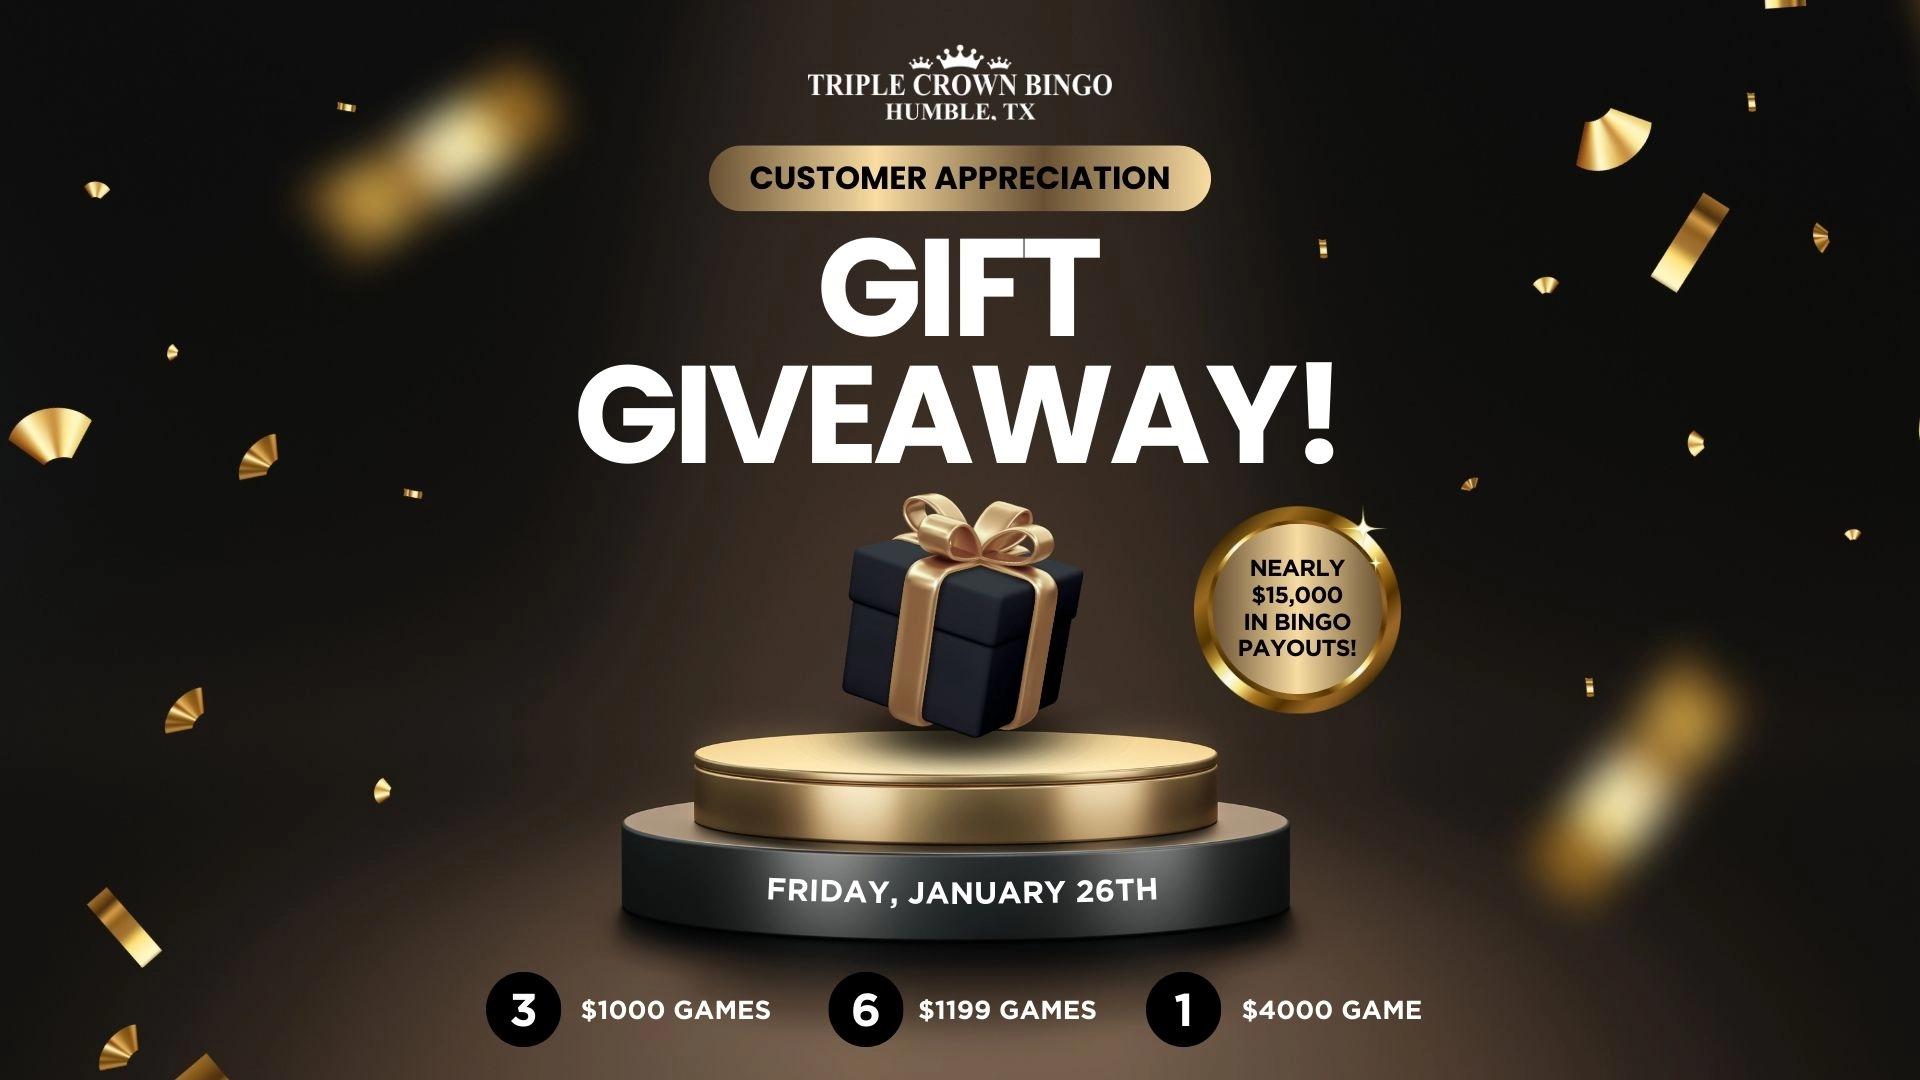 TCB-Humble-Gift Giveaway